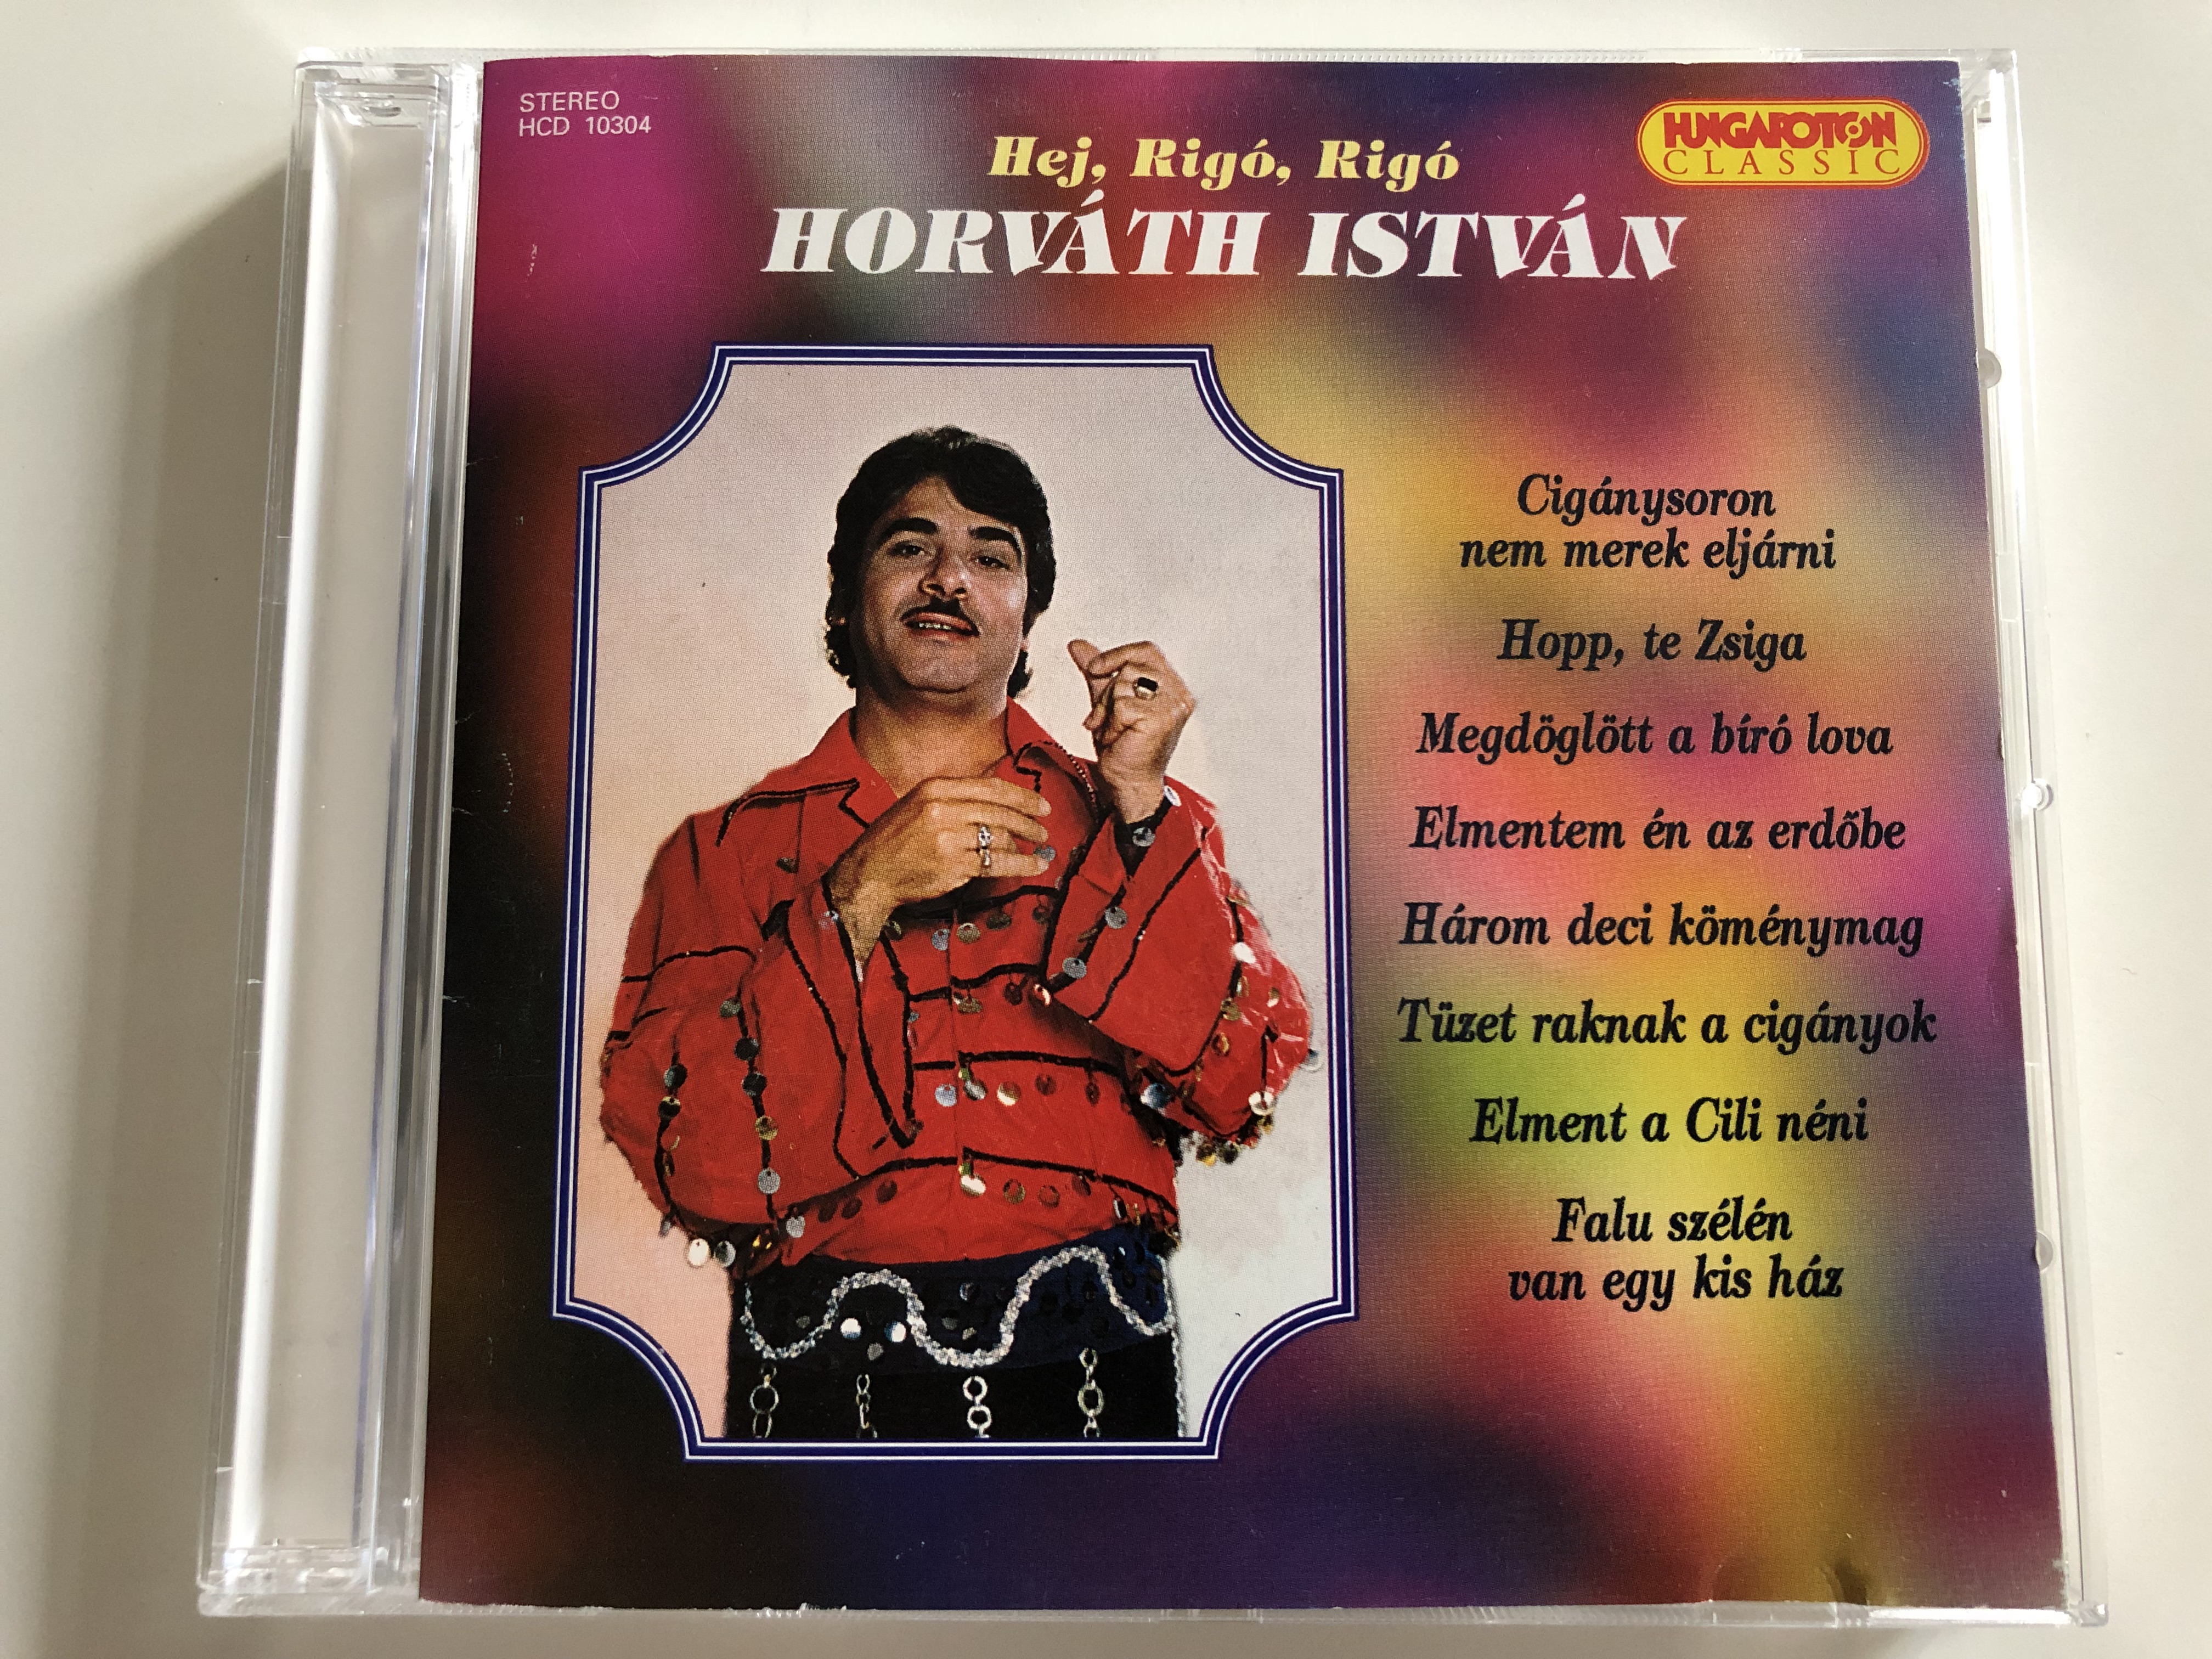 horv-th-istv-n-hej-rig-rig-hopp-te-zsiga-elmentem-n-az-erd-be-elment-a-cili-n-ni-hungaroton-classic-audio-cd-1996-hcd-10304-2-.jpg